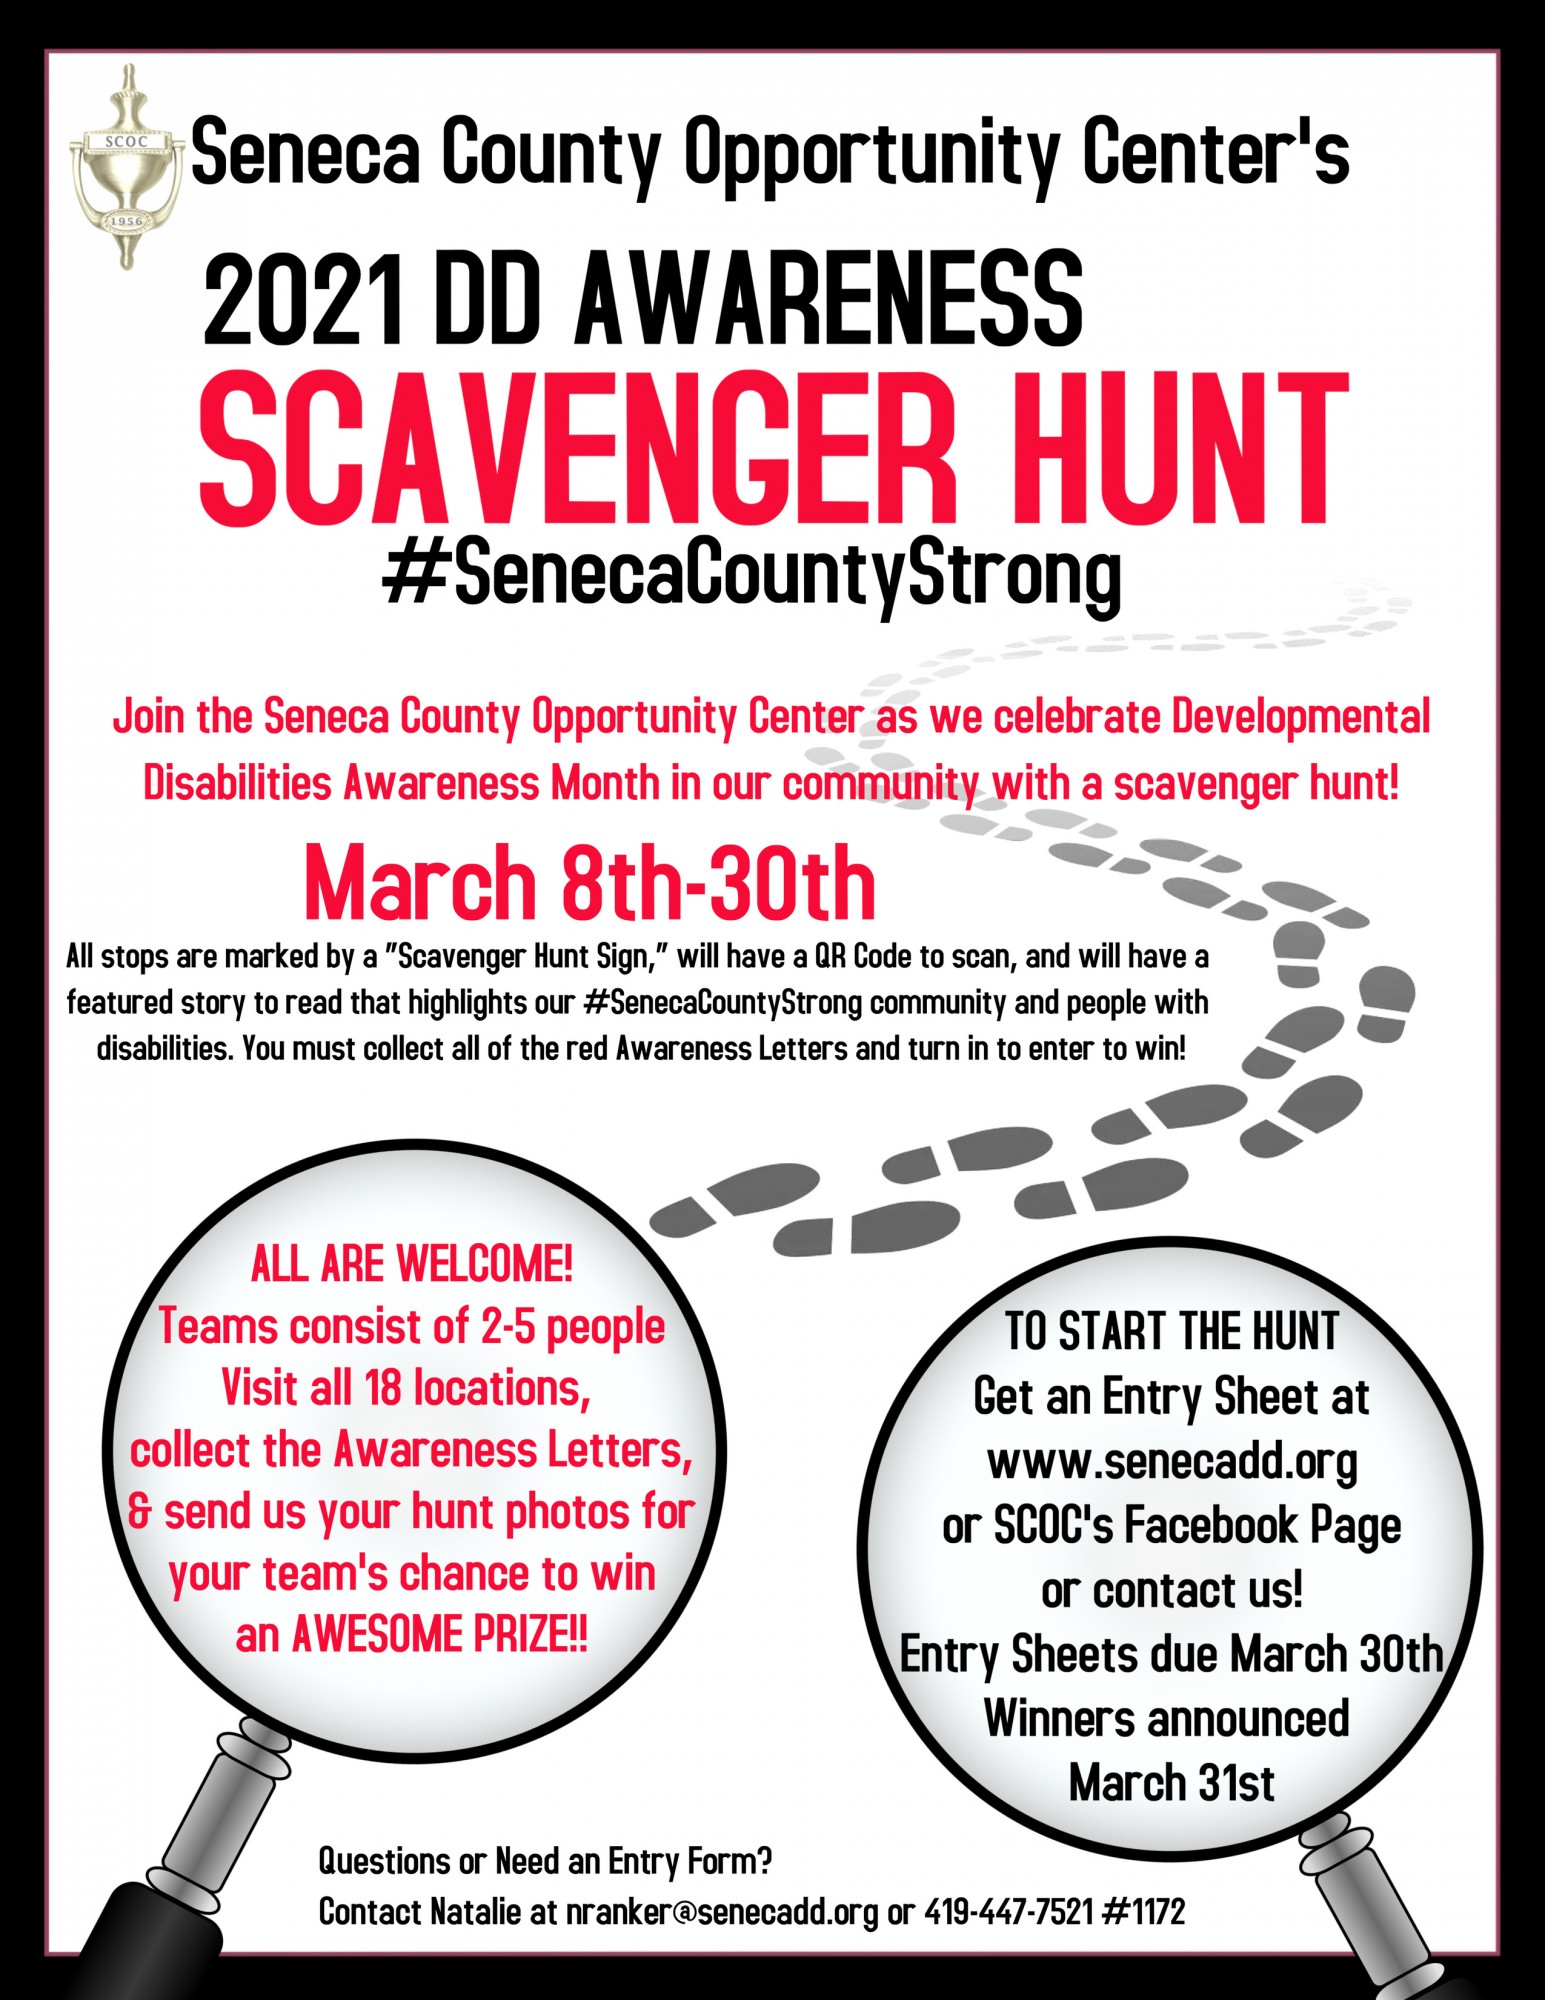 SCOC 2021 DD Awareness Scavenger Hunt